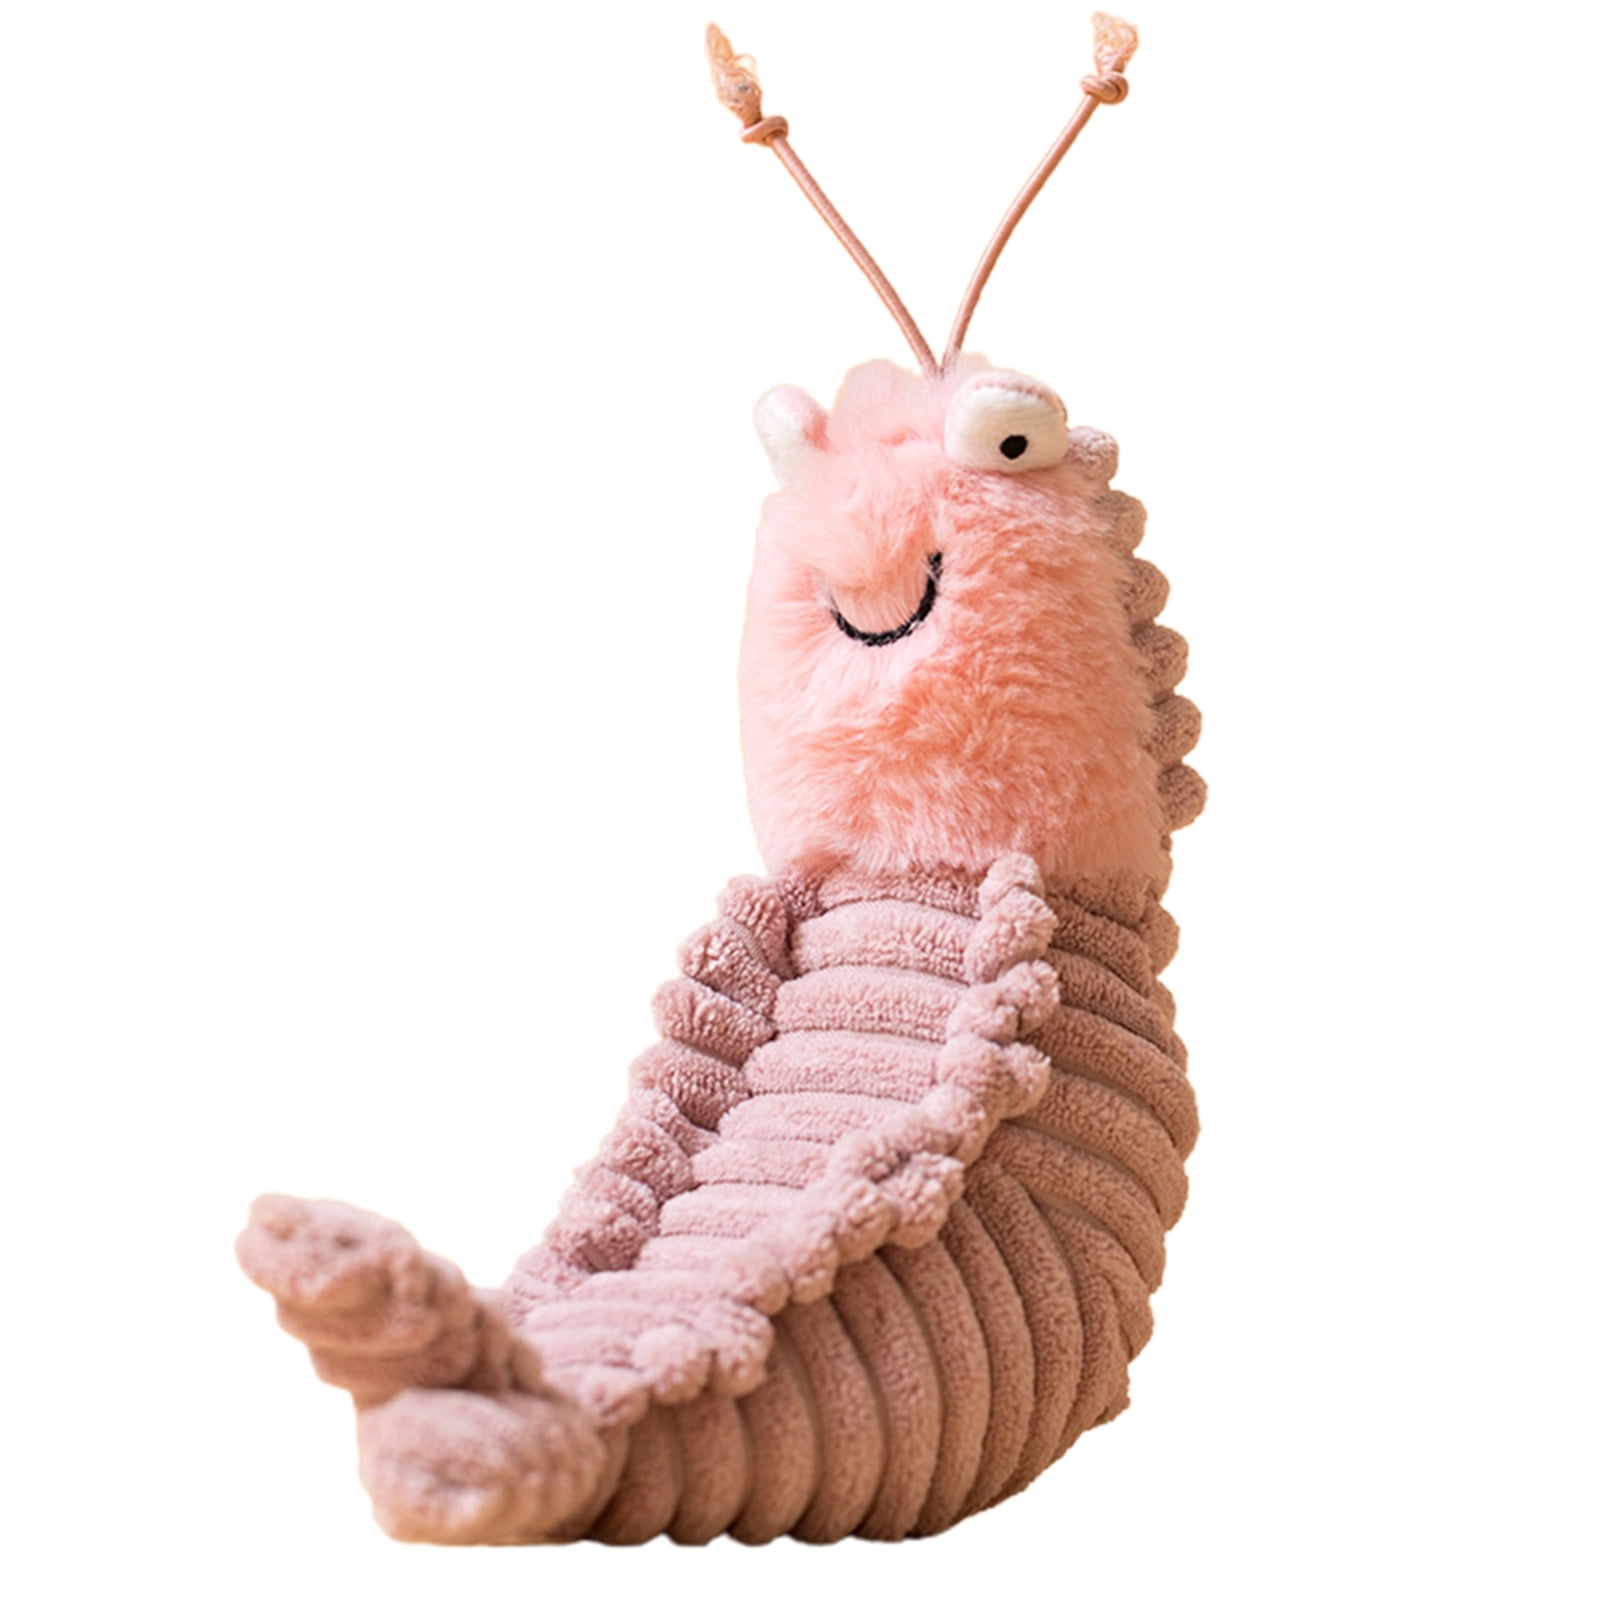 22cm Lovely Sheldon Shrimp Plush Toy Stuffed Animal Cartoon Scales Toys for Kids